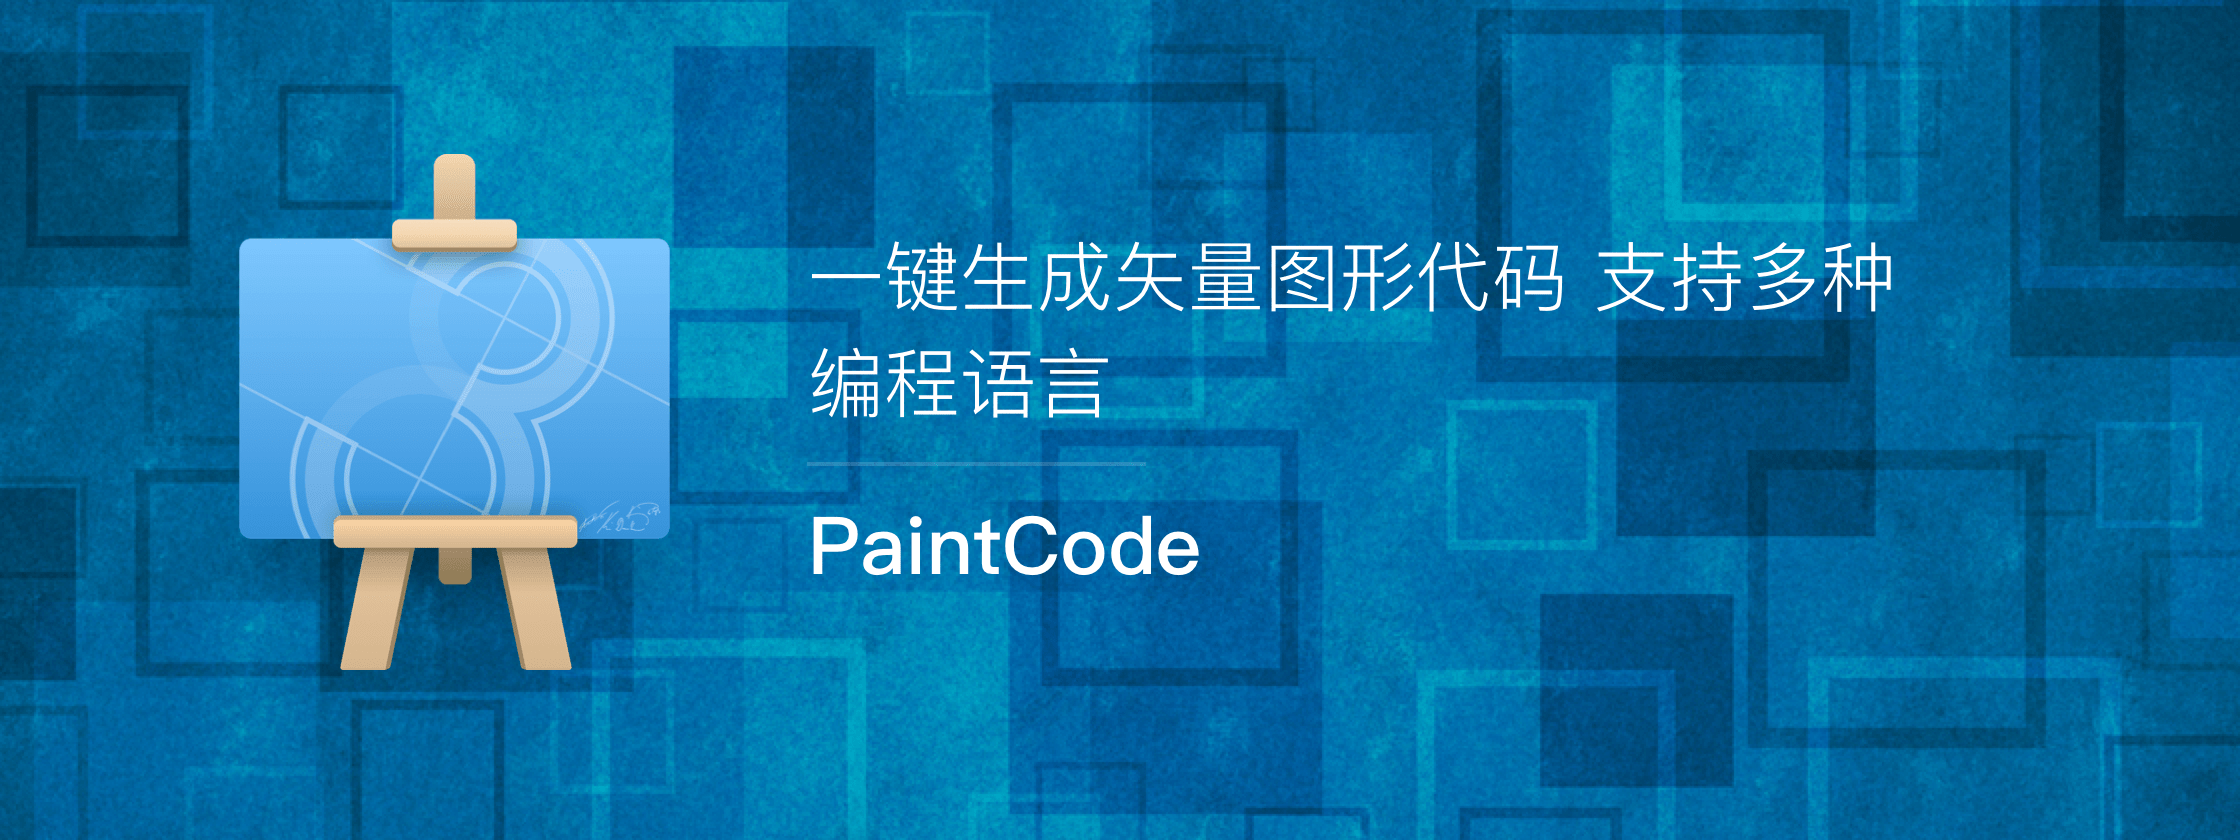 PaintCode，将你的矢量图形转换为编程代码